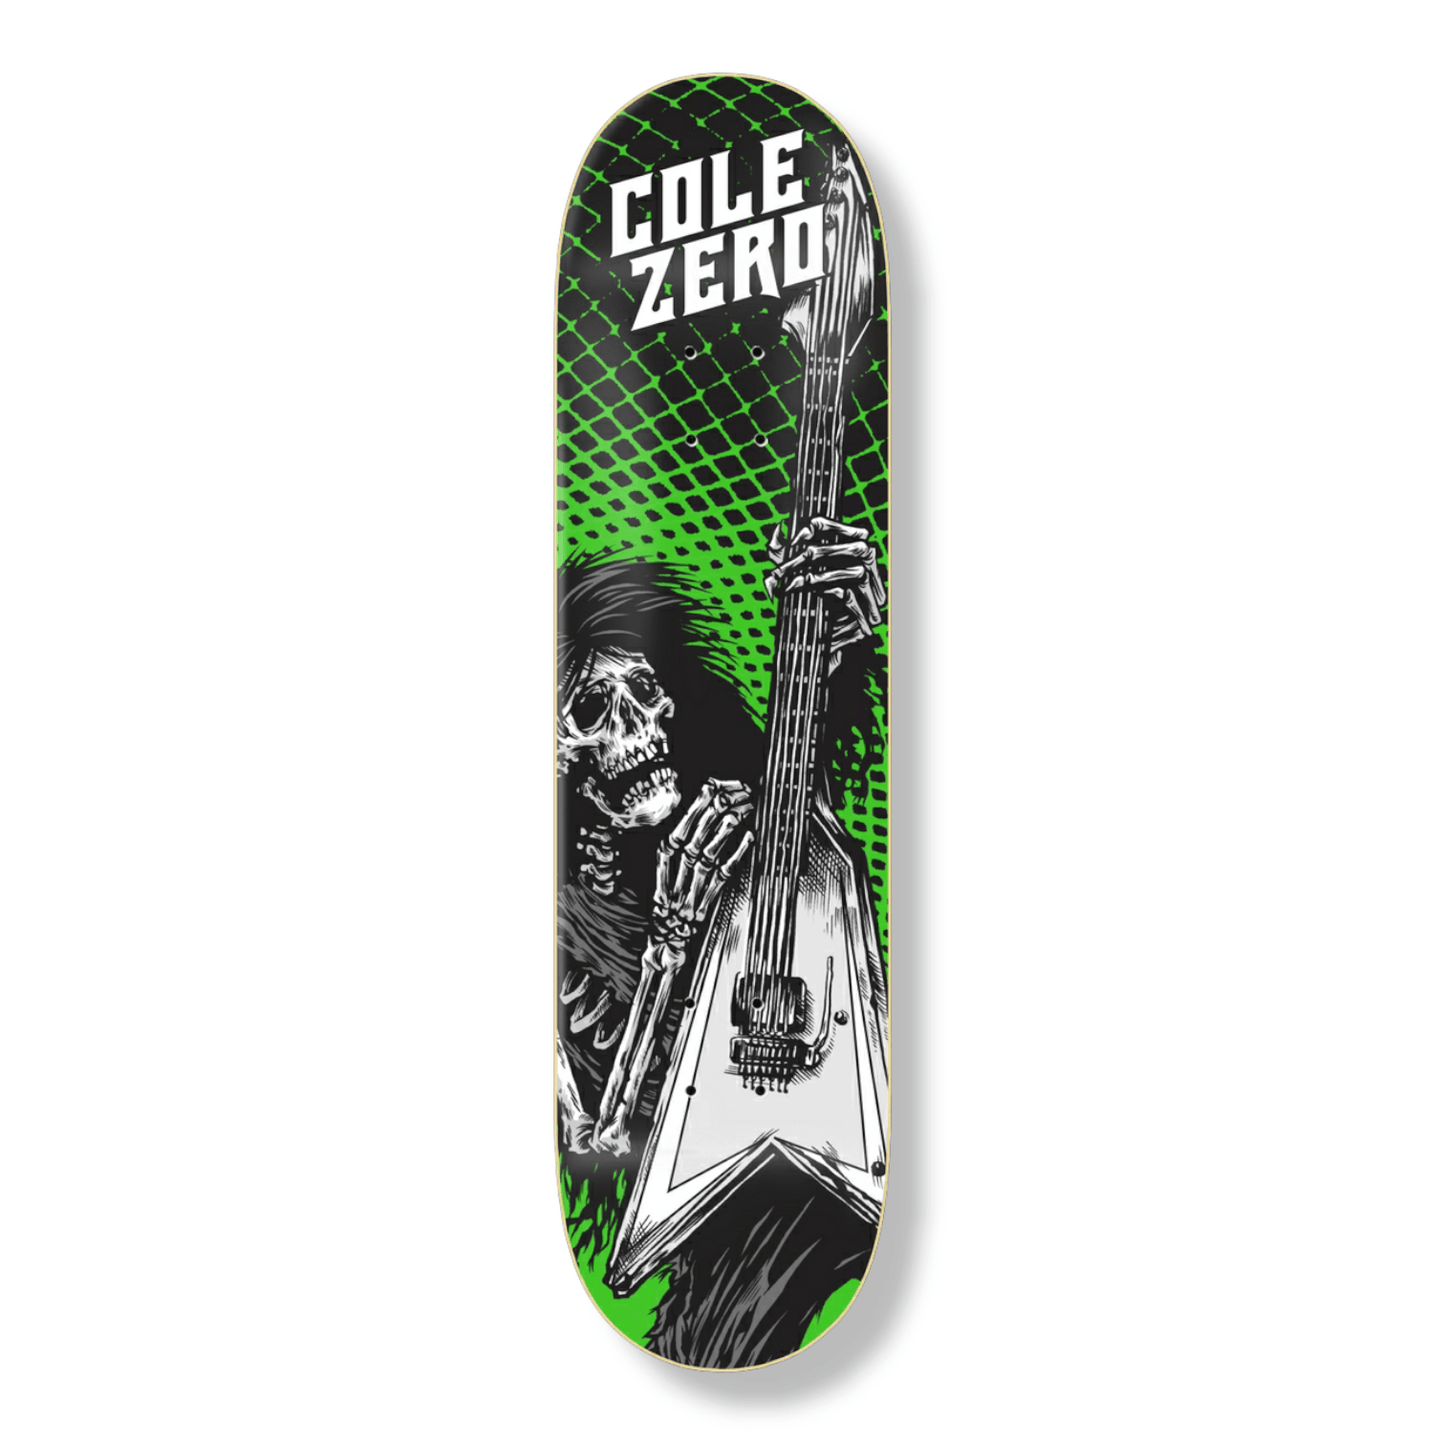 Zero | 8.25" Chris Cole Deathrocker